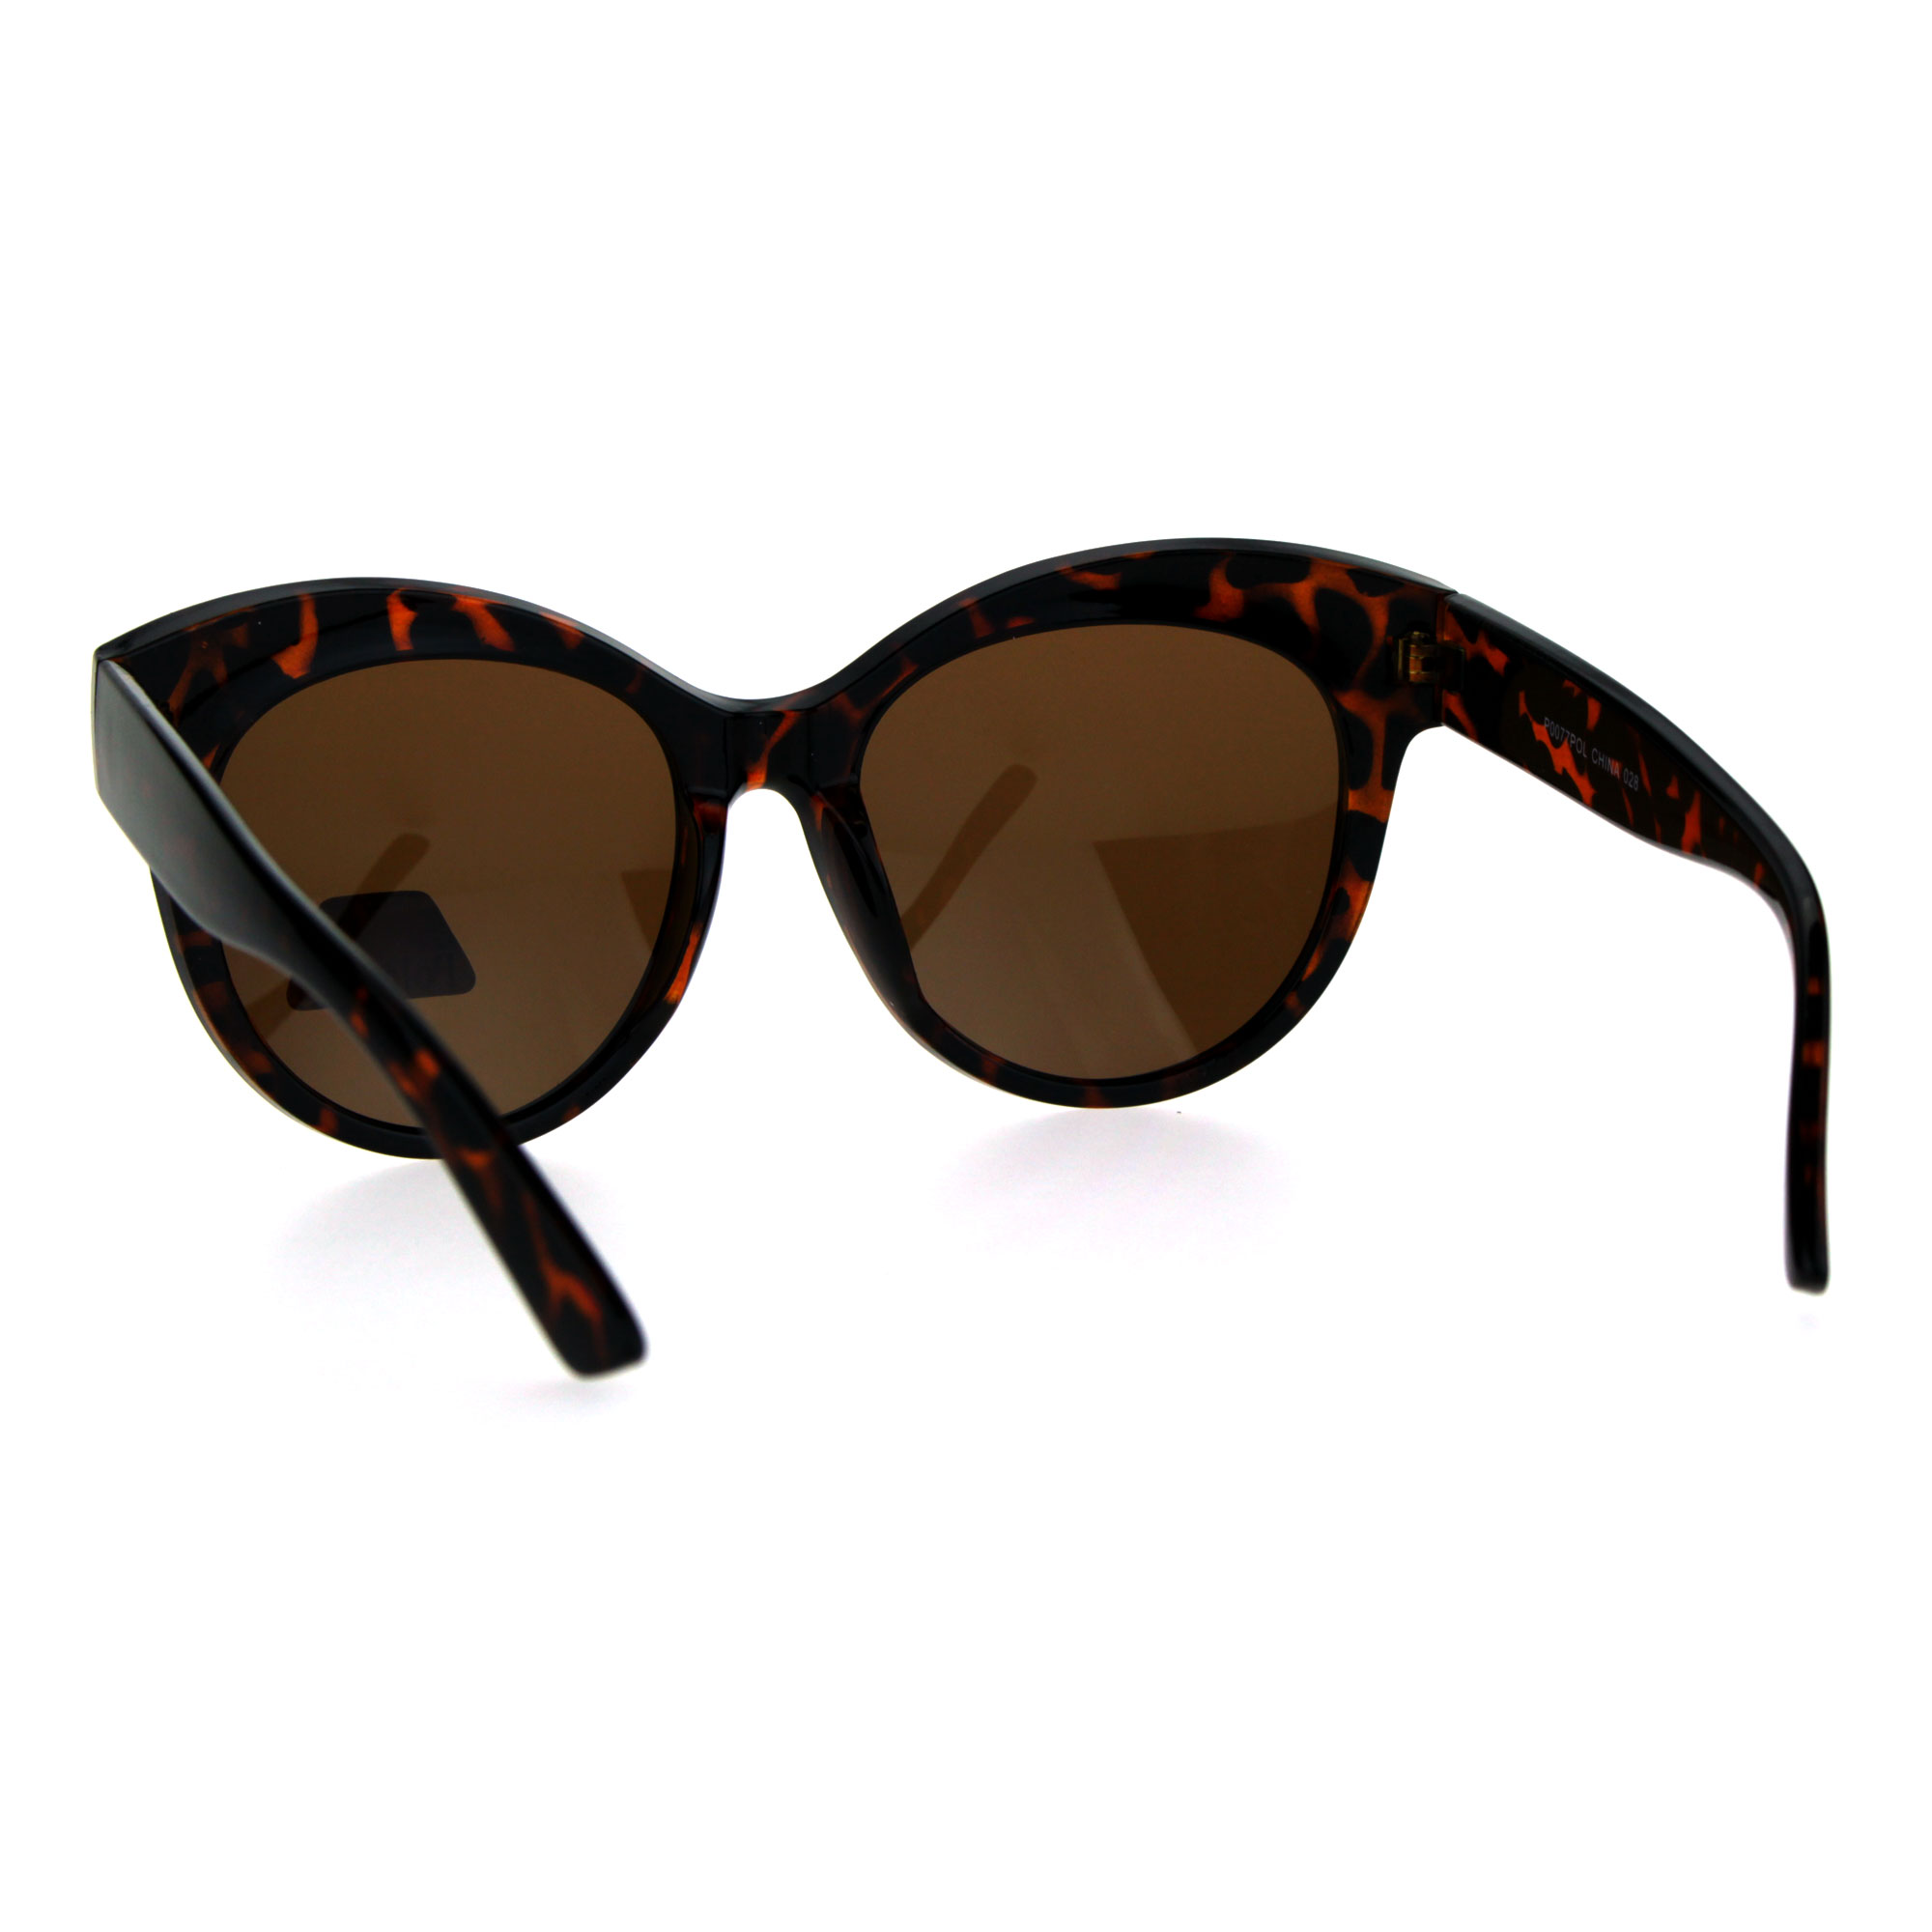 Antiglare Polarized Oversize Thick Plastic Cat Eye Diva Sunglasses | eBay